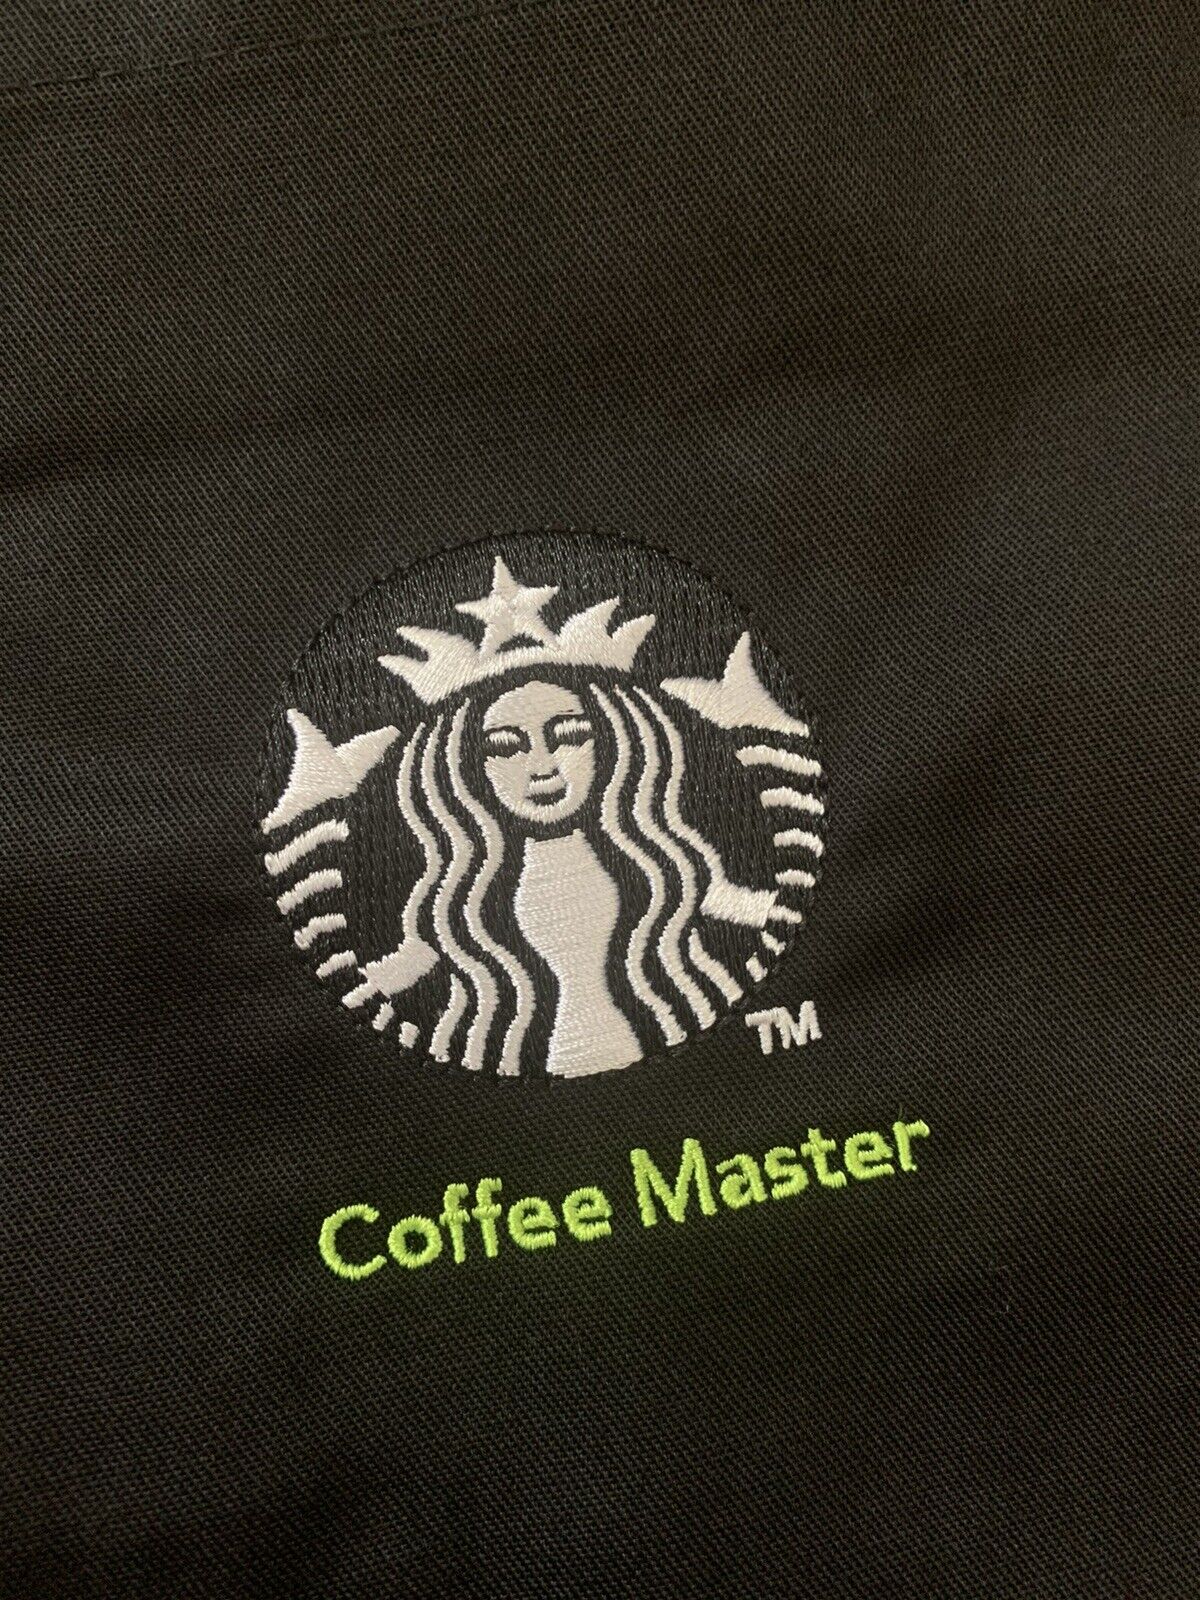 New Starbucks Coffee Black Coffee Master Apron Official Uniform Barista